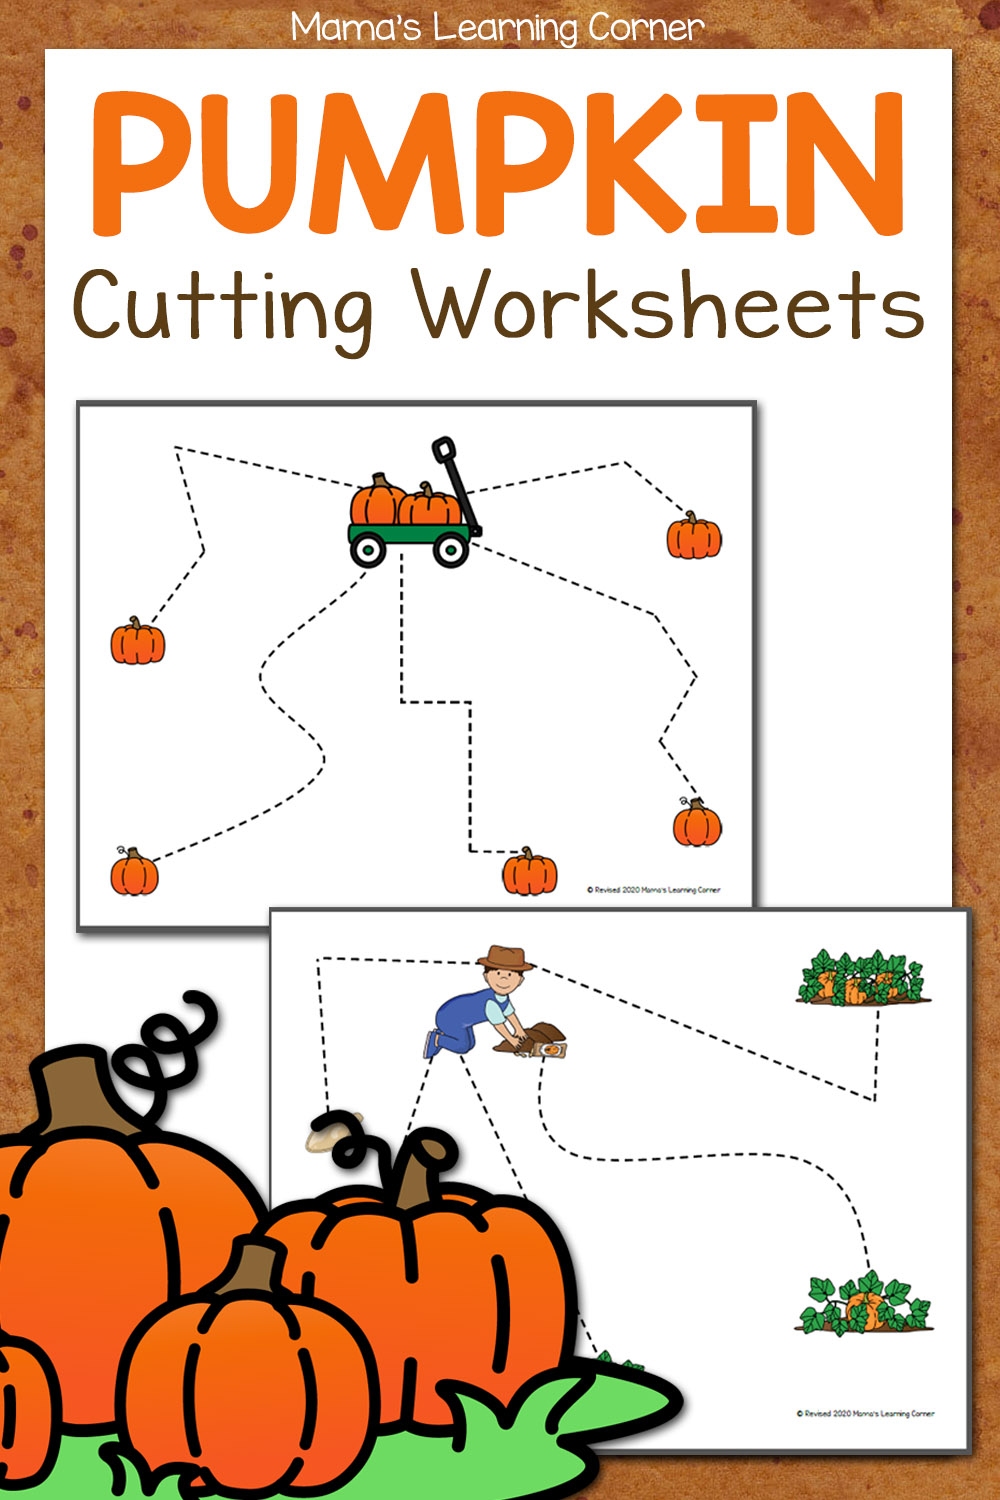 Pumpkin Cutting Worksheets - Mamas Learning Corner